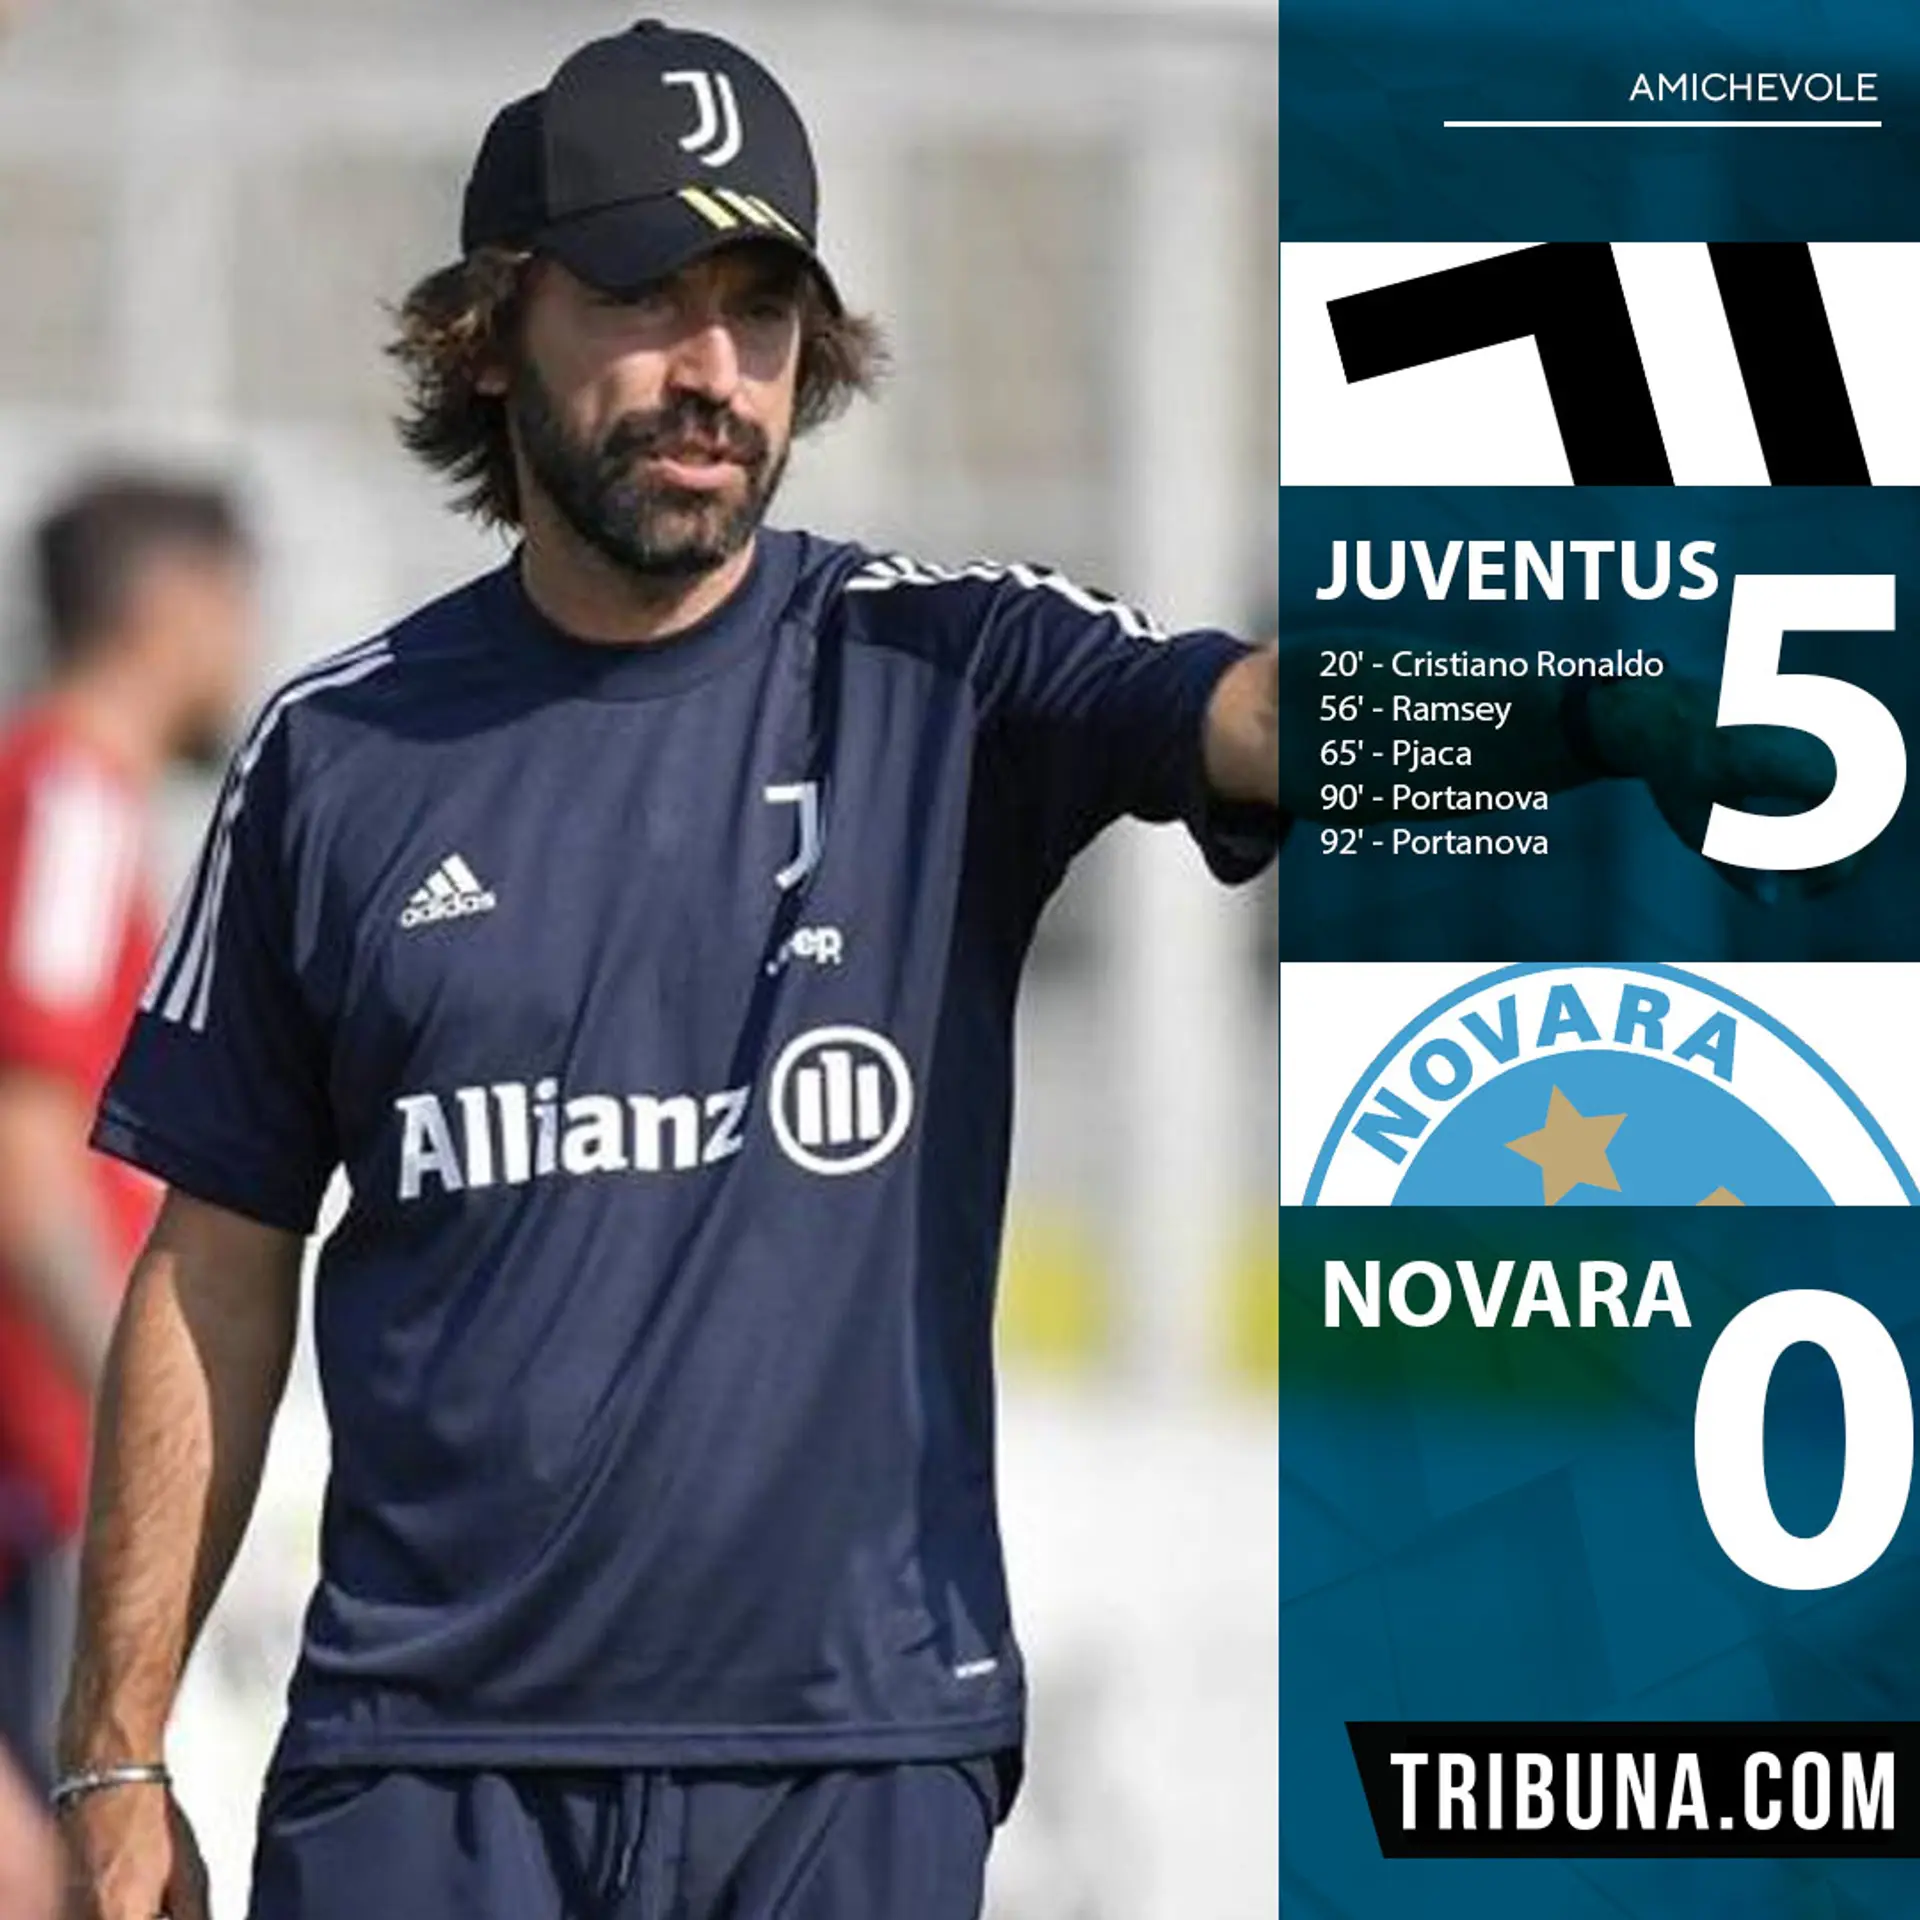 ⚪️⚫️ FINALE | Juventus 5-0 Novara: le migliori reazioni LIVE dalla community globale Bianconera